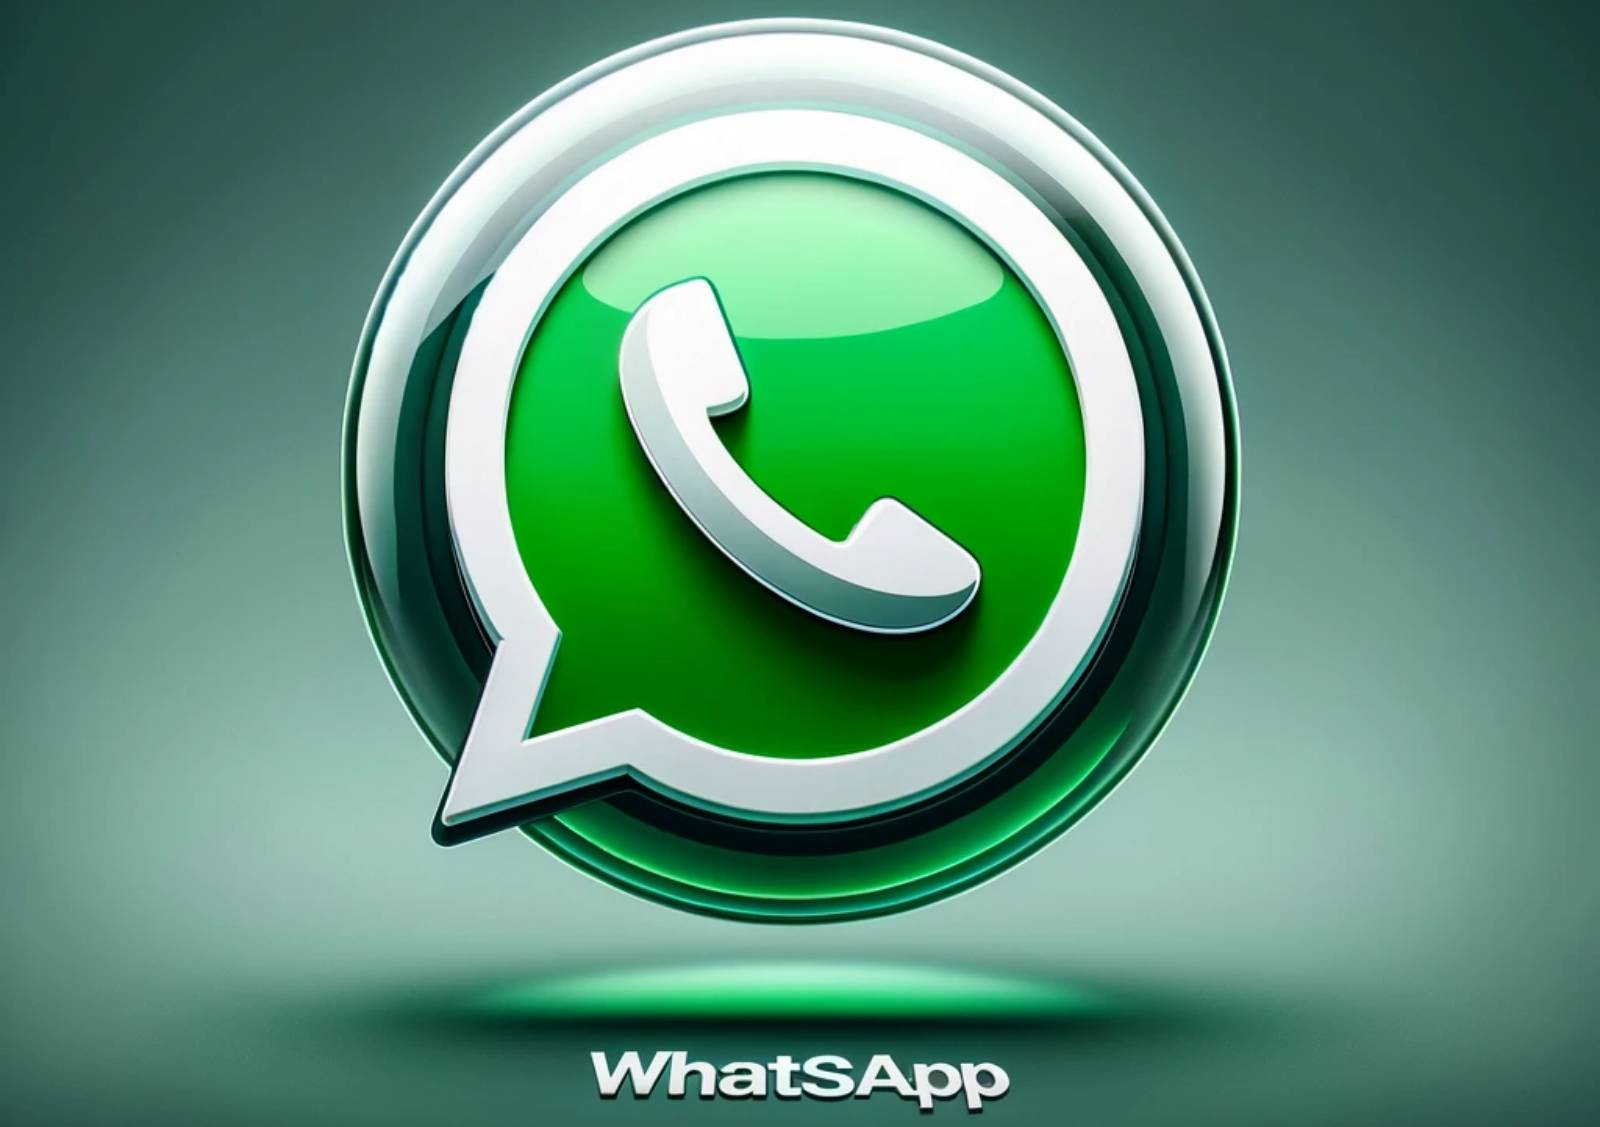 WhatsApp exceptional